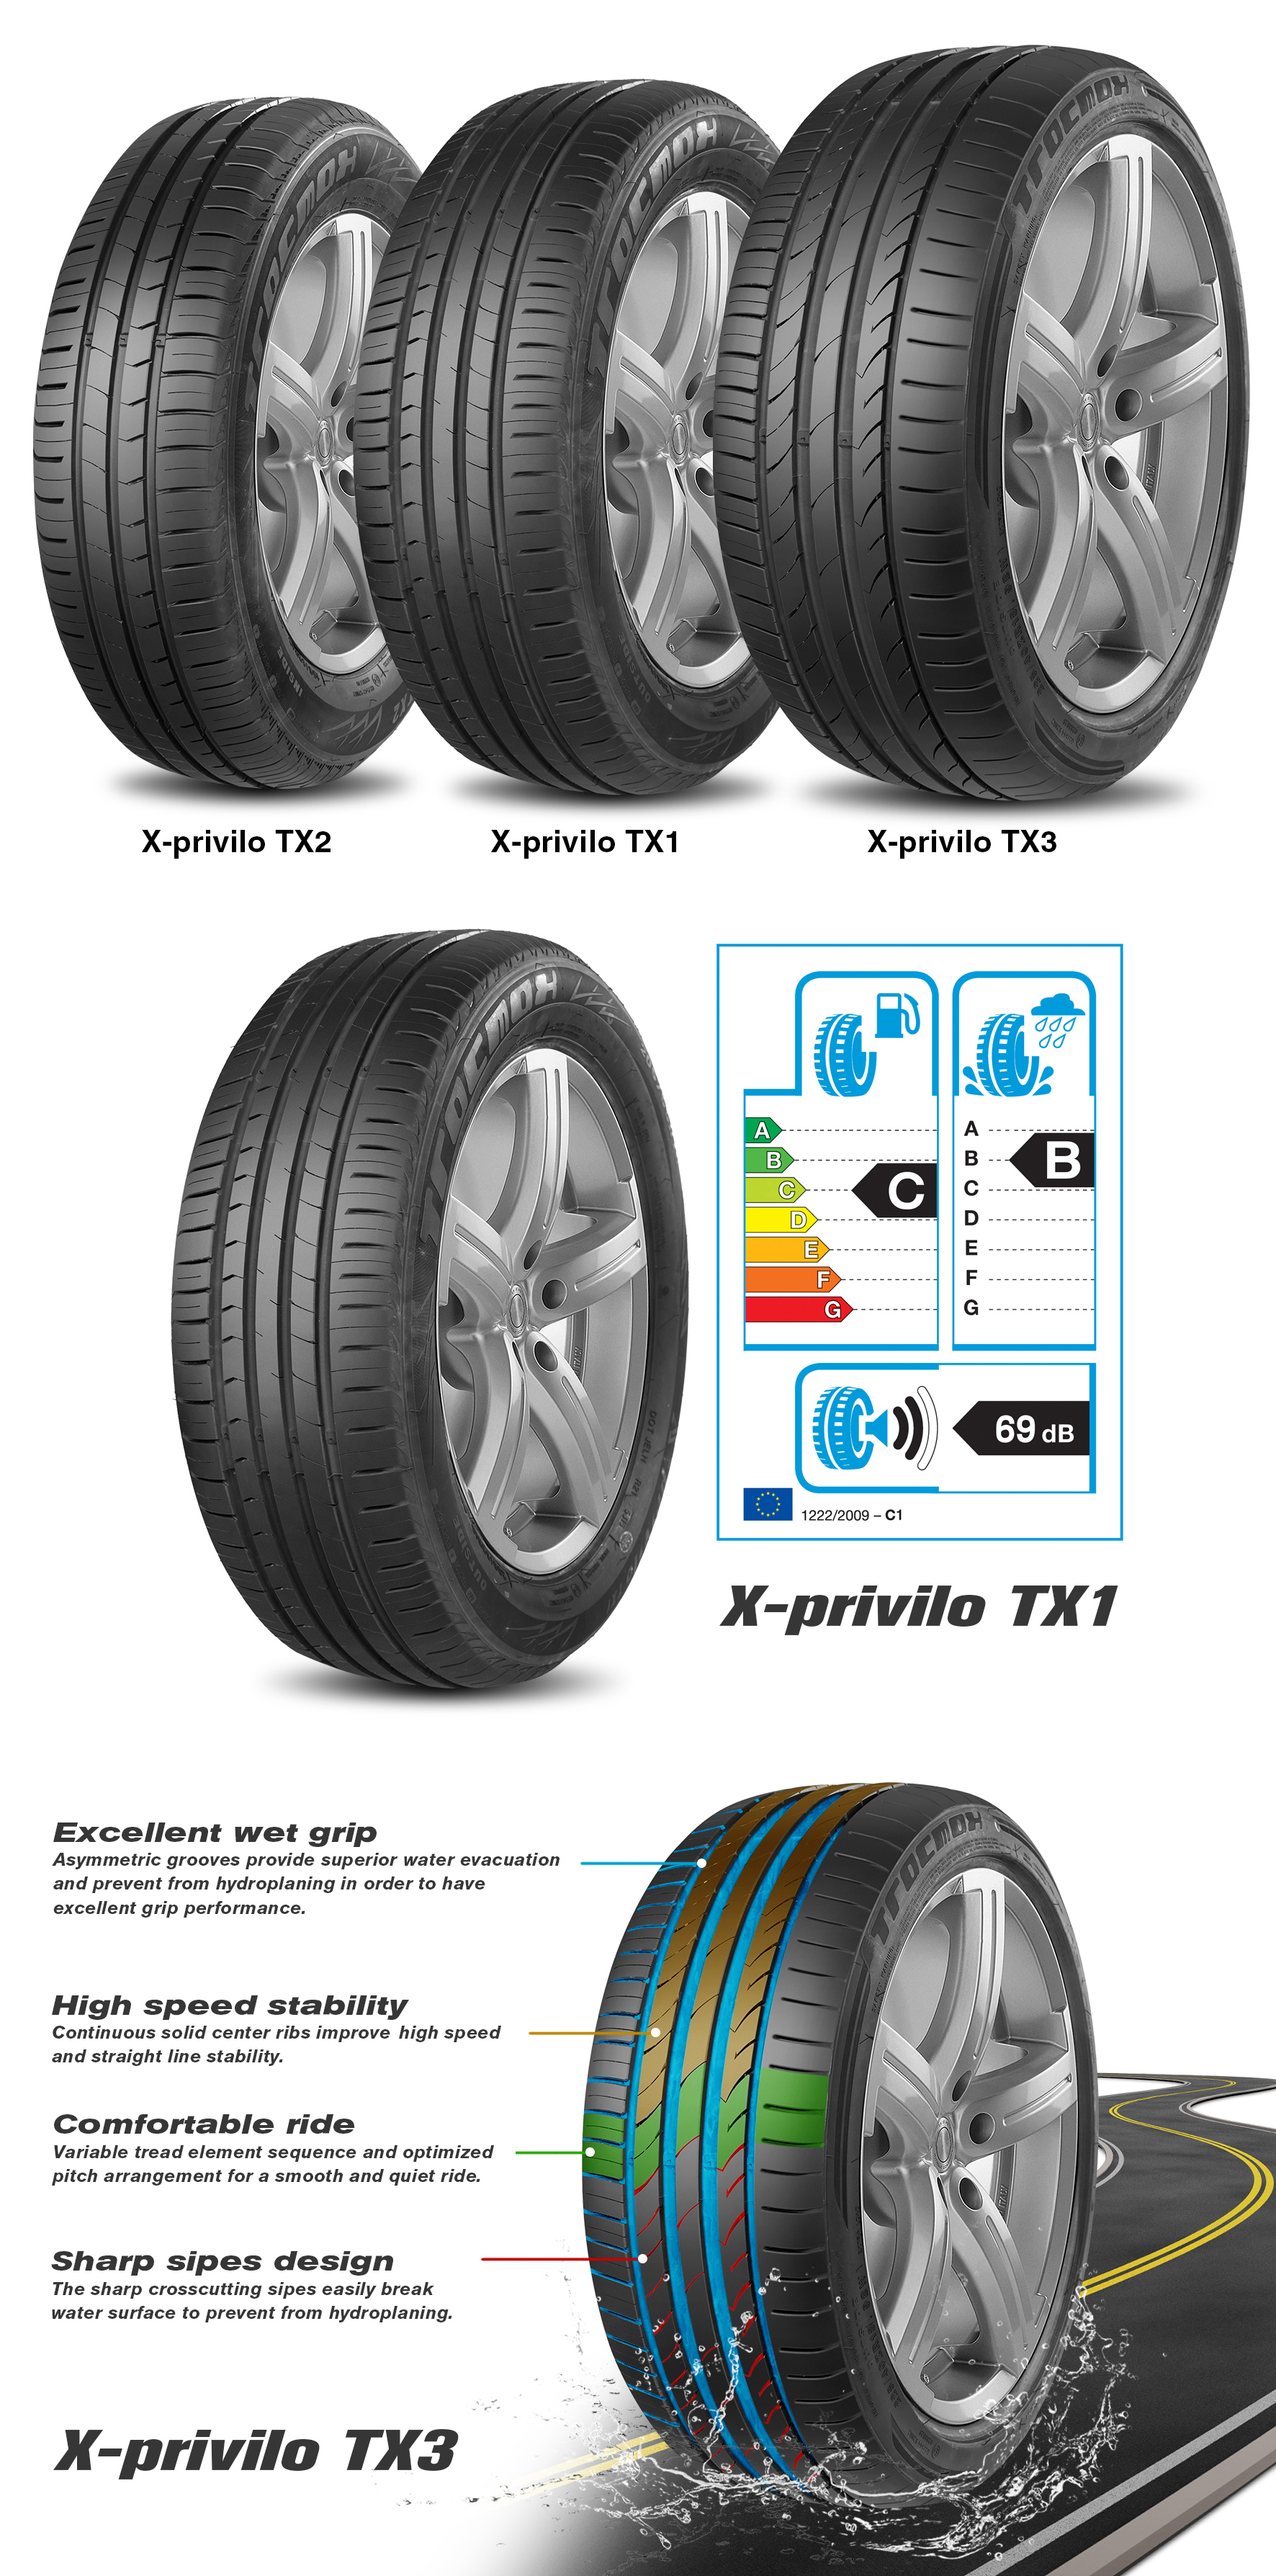 Tracmax launches new X-privilo series - Tyrepress